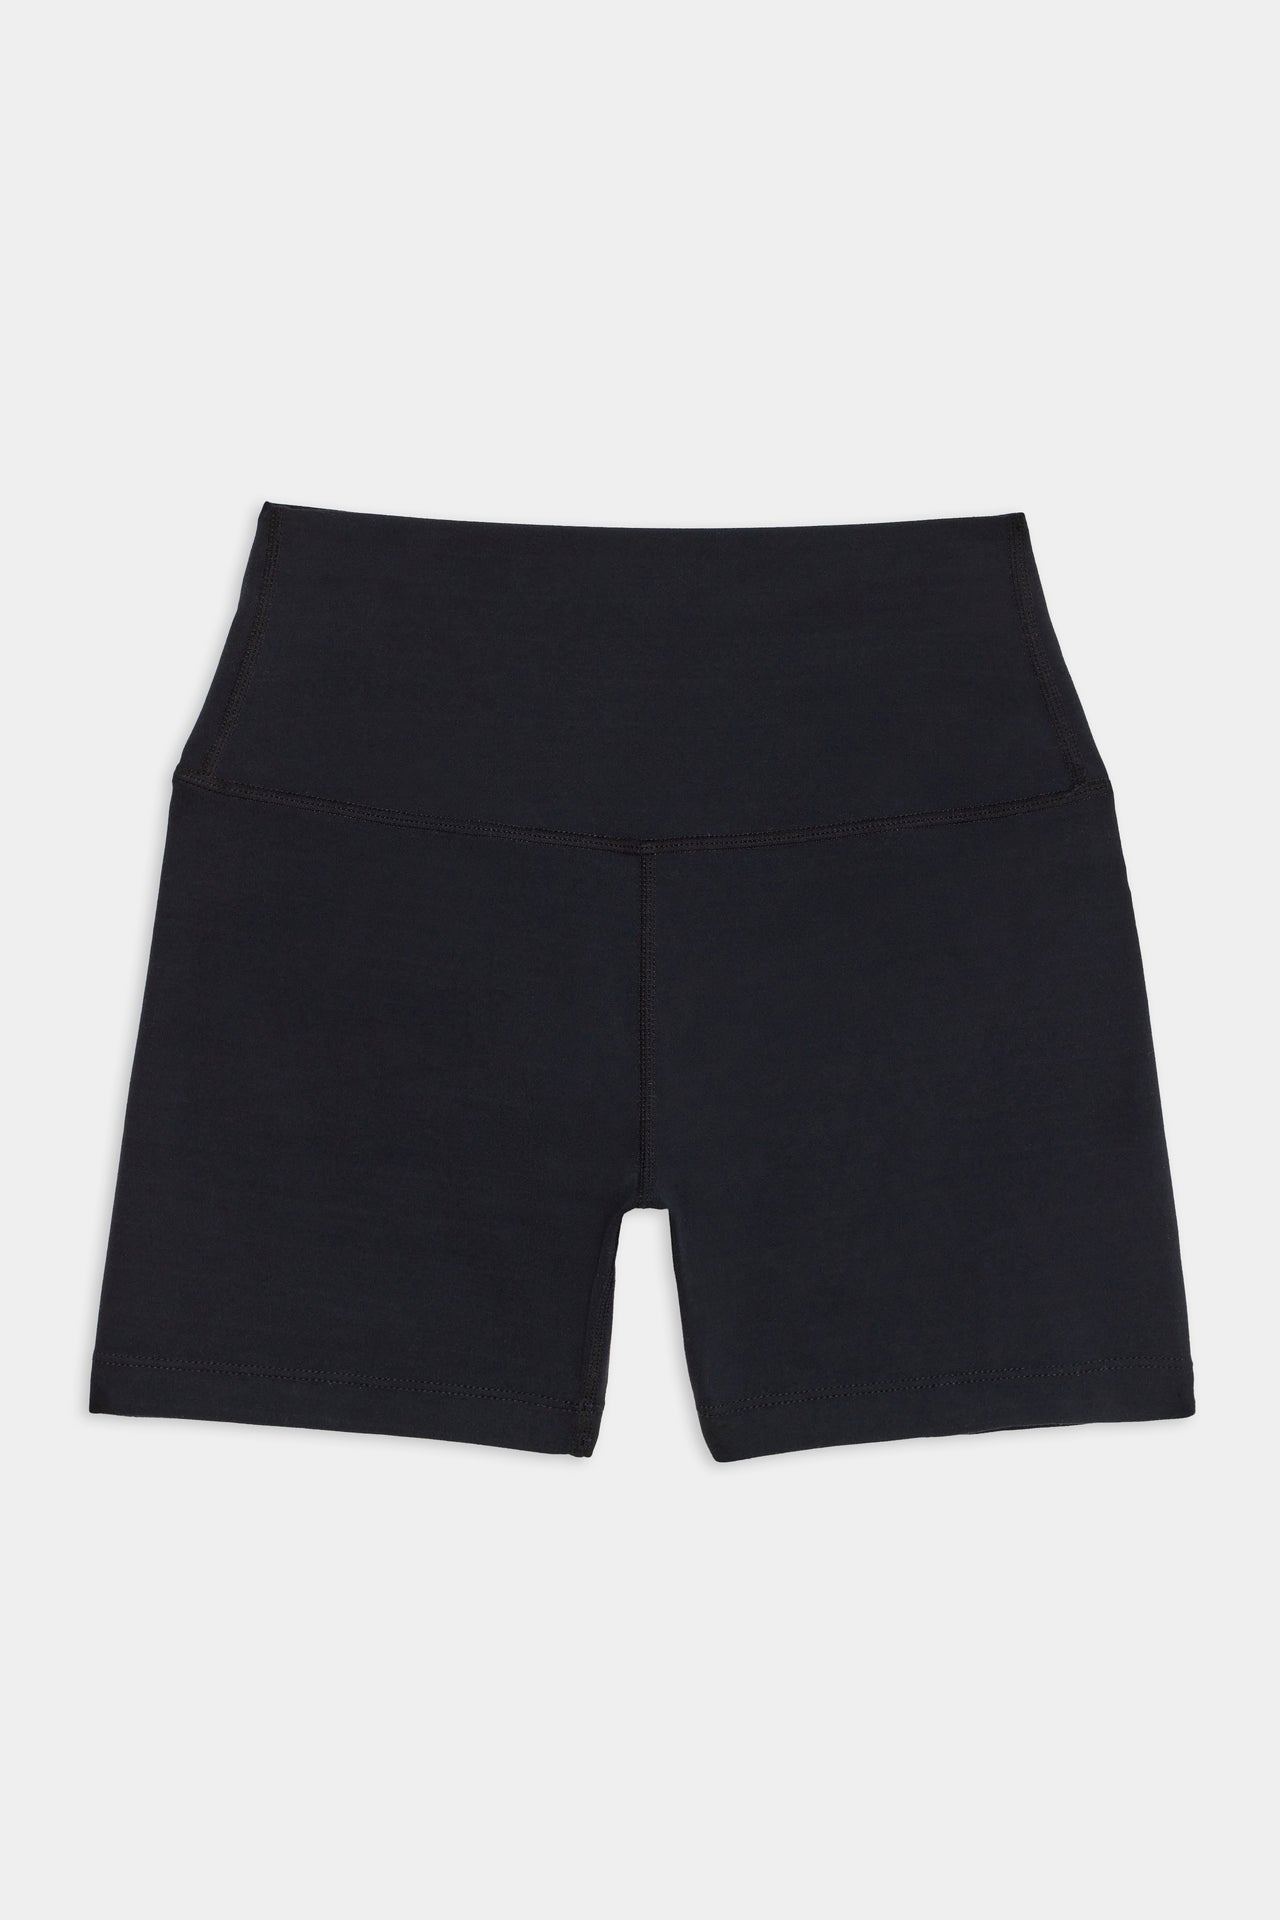 Flat view of black shorts